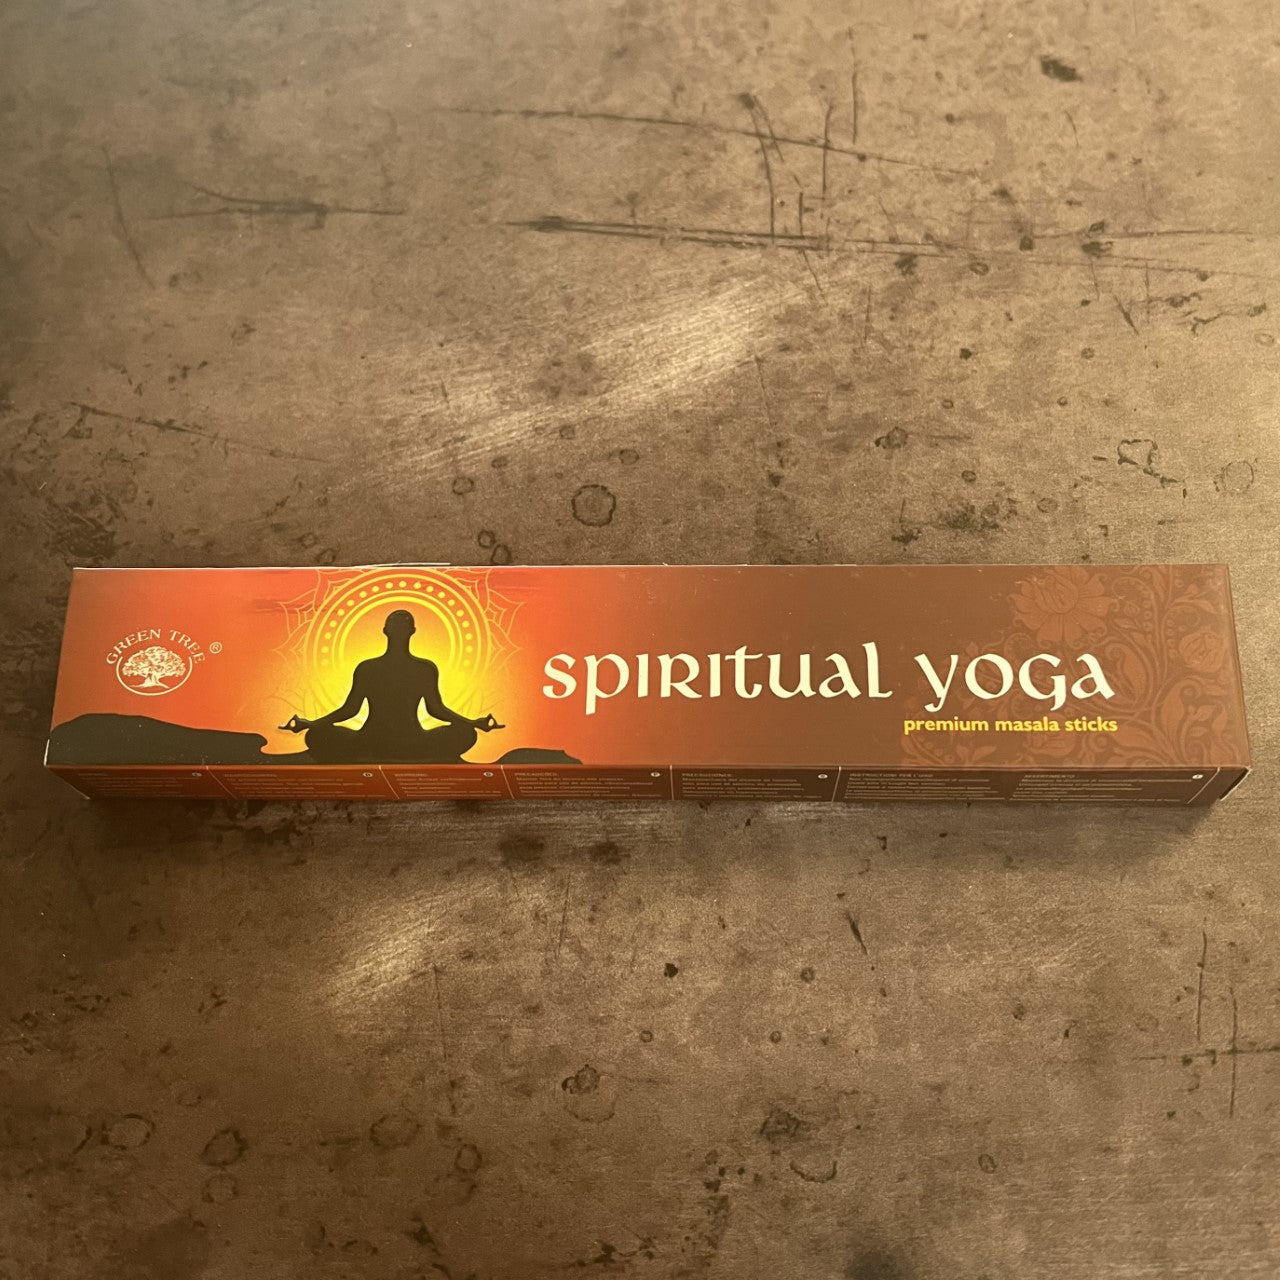 Spiritual Yoga